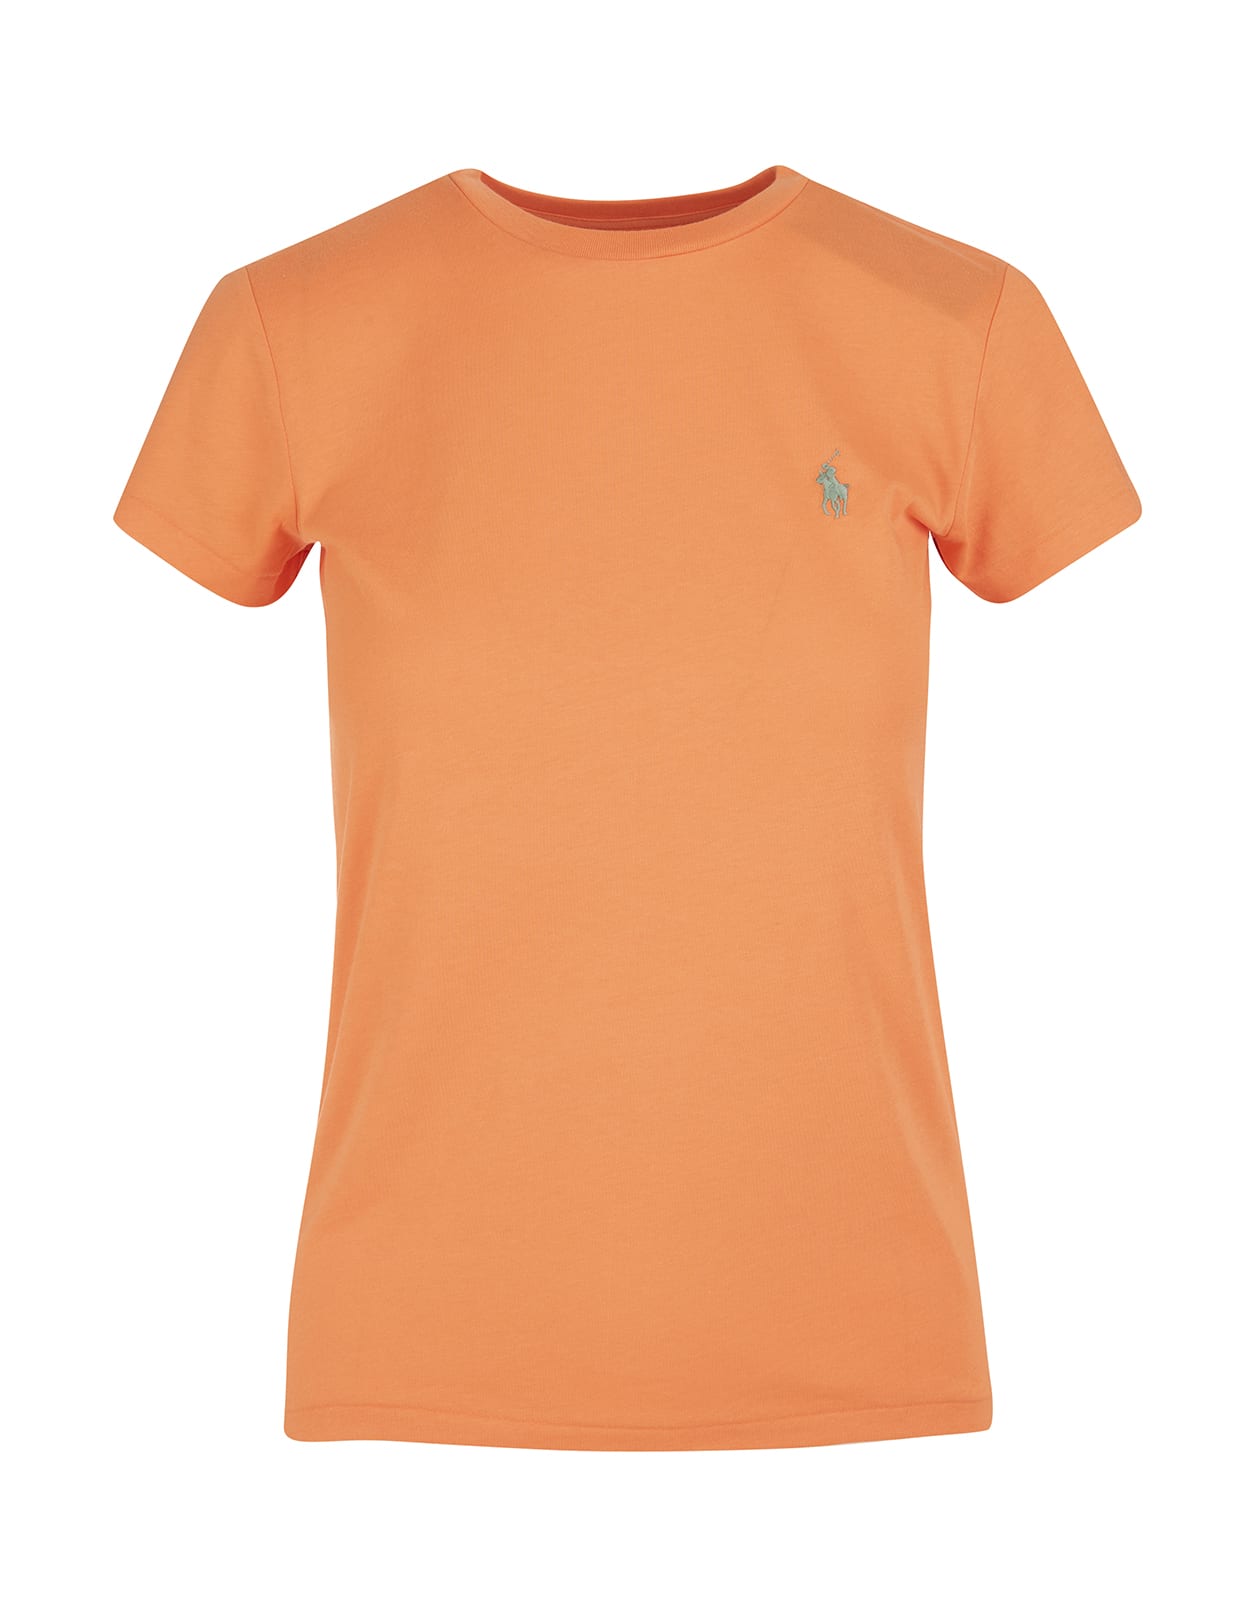 Ralph Lauren Woman Basic Orange T-shirt With Sage Green Pony